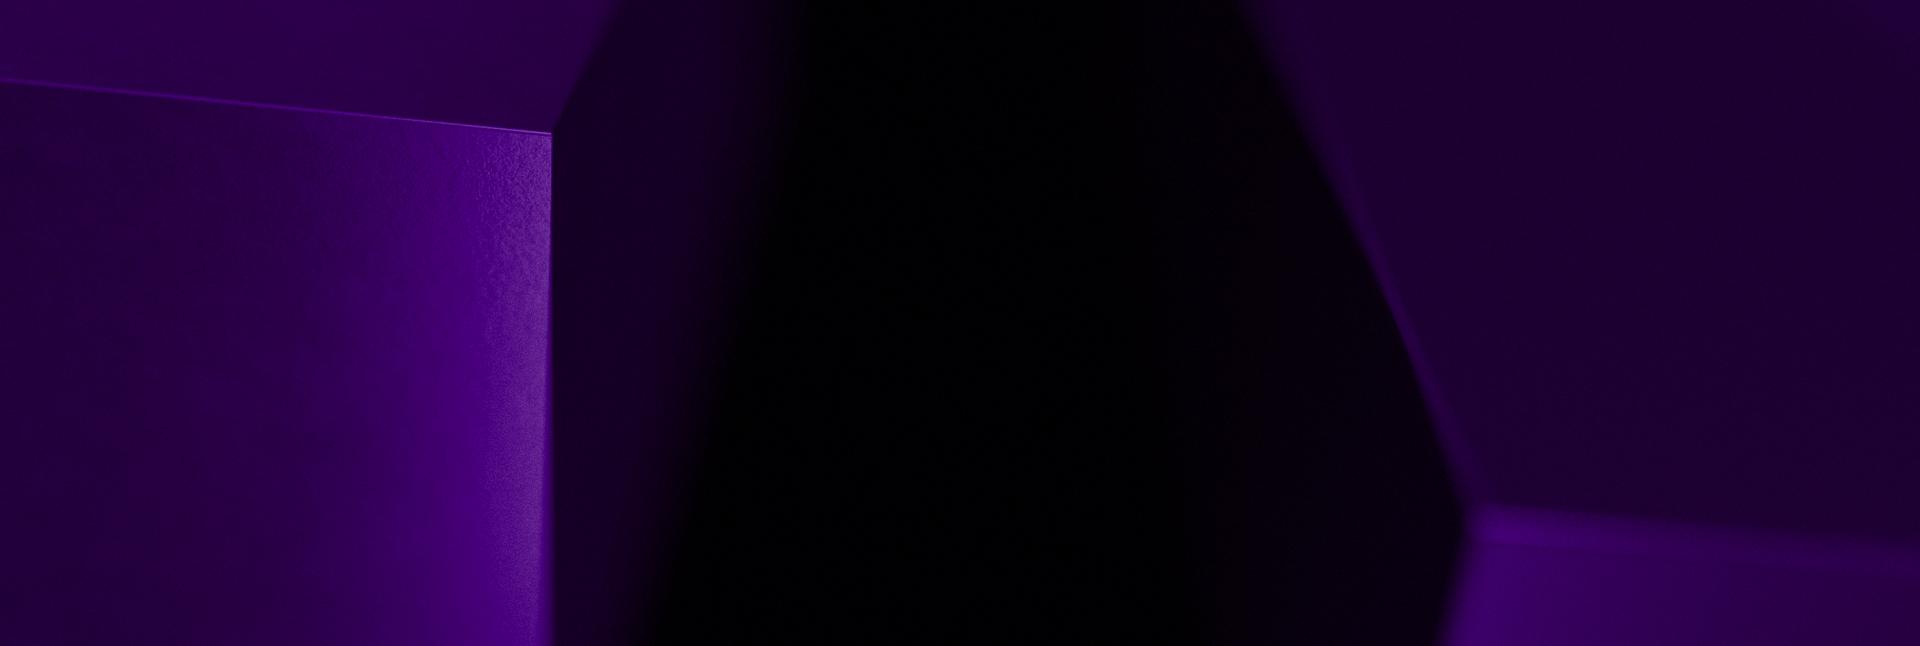 rra-background-purple-11.jpg